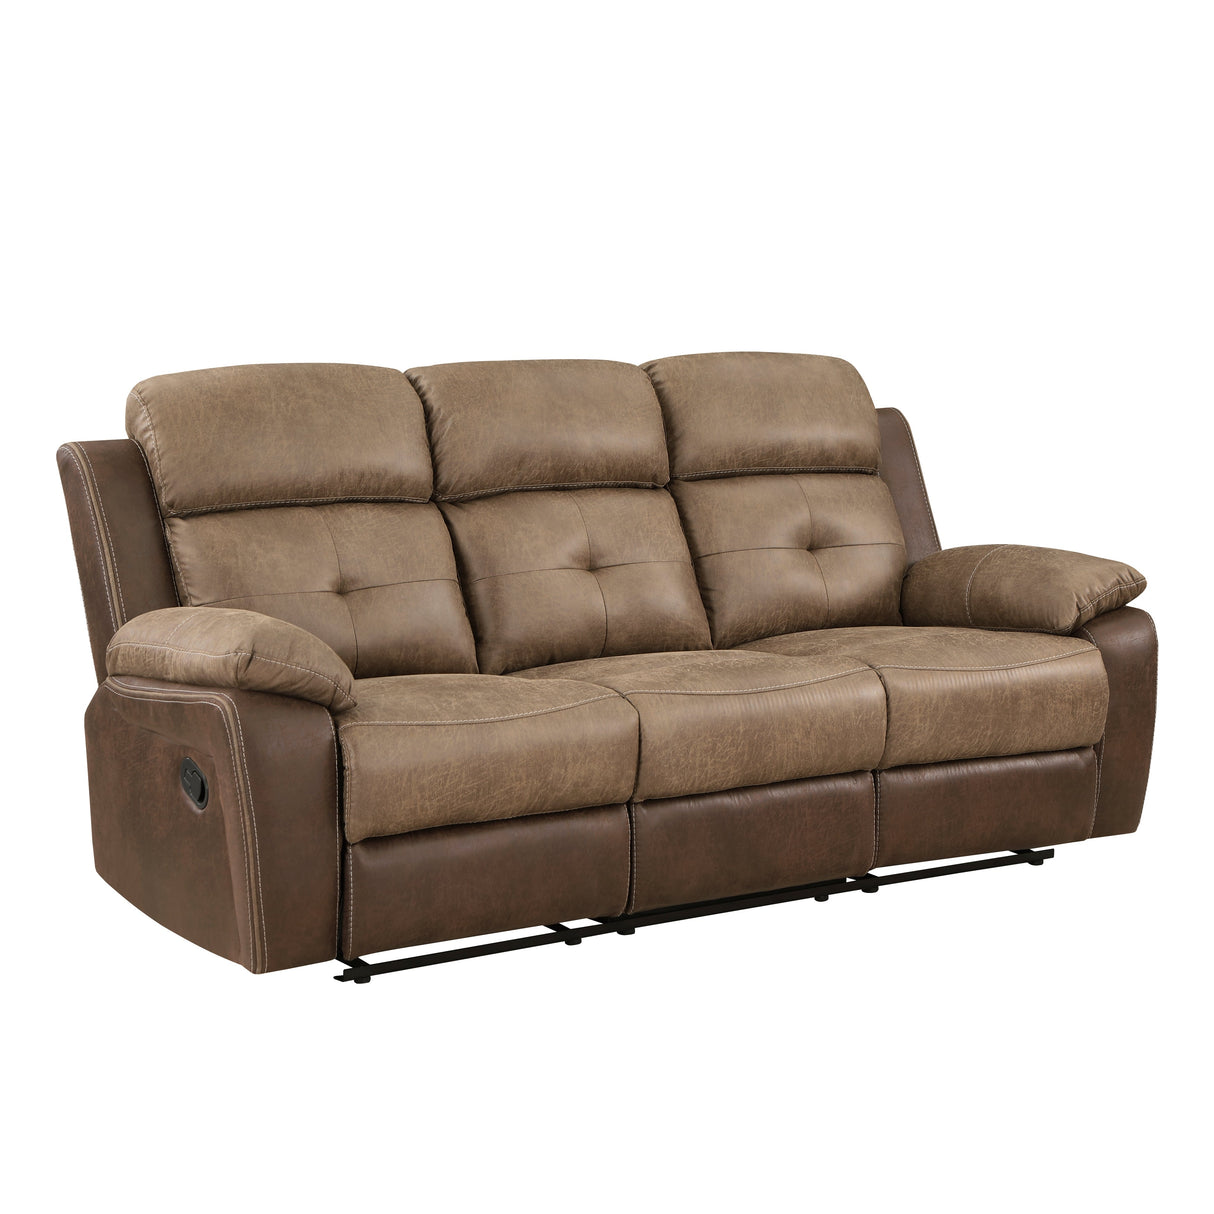 Glendale Brown Microfiber Double Reclining Sofa